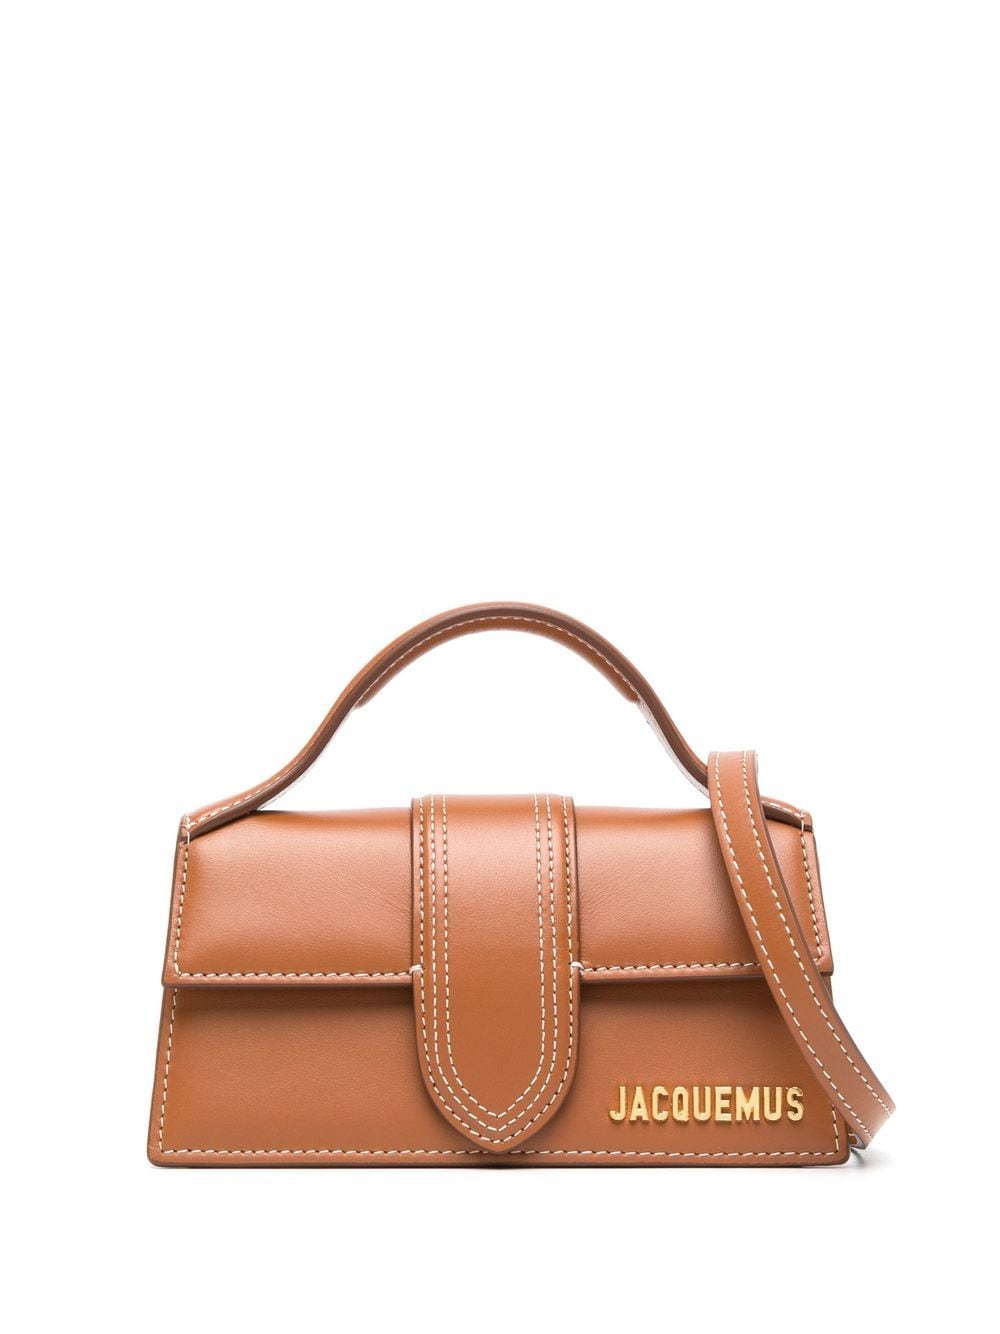 Jacquemus Le Bambino leather tote bag - Brown von Jacquemus